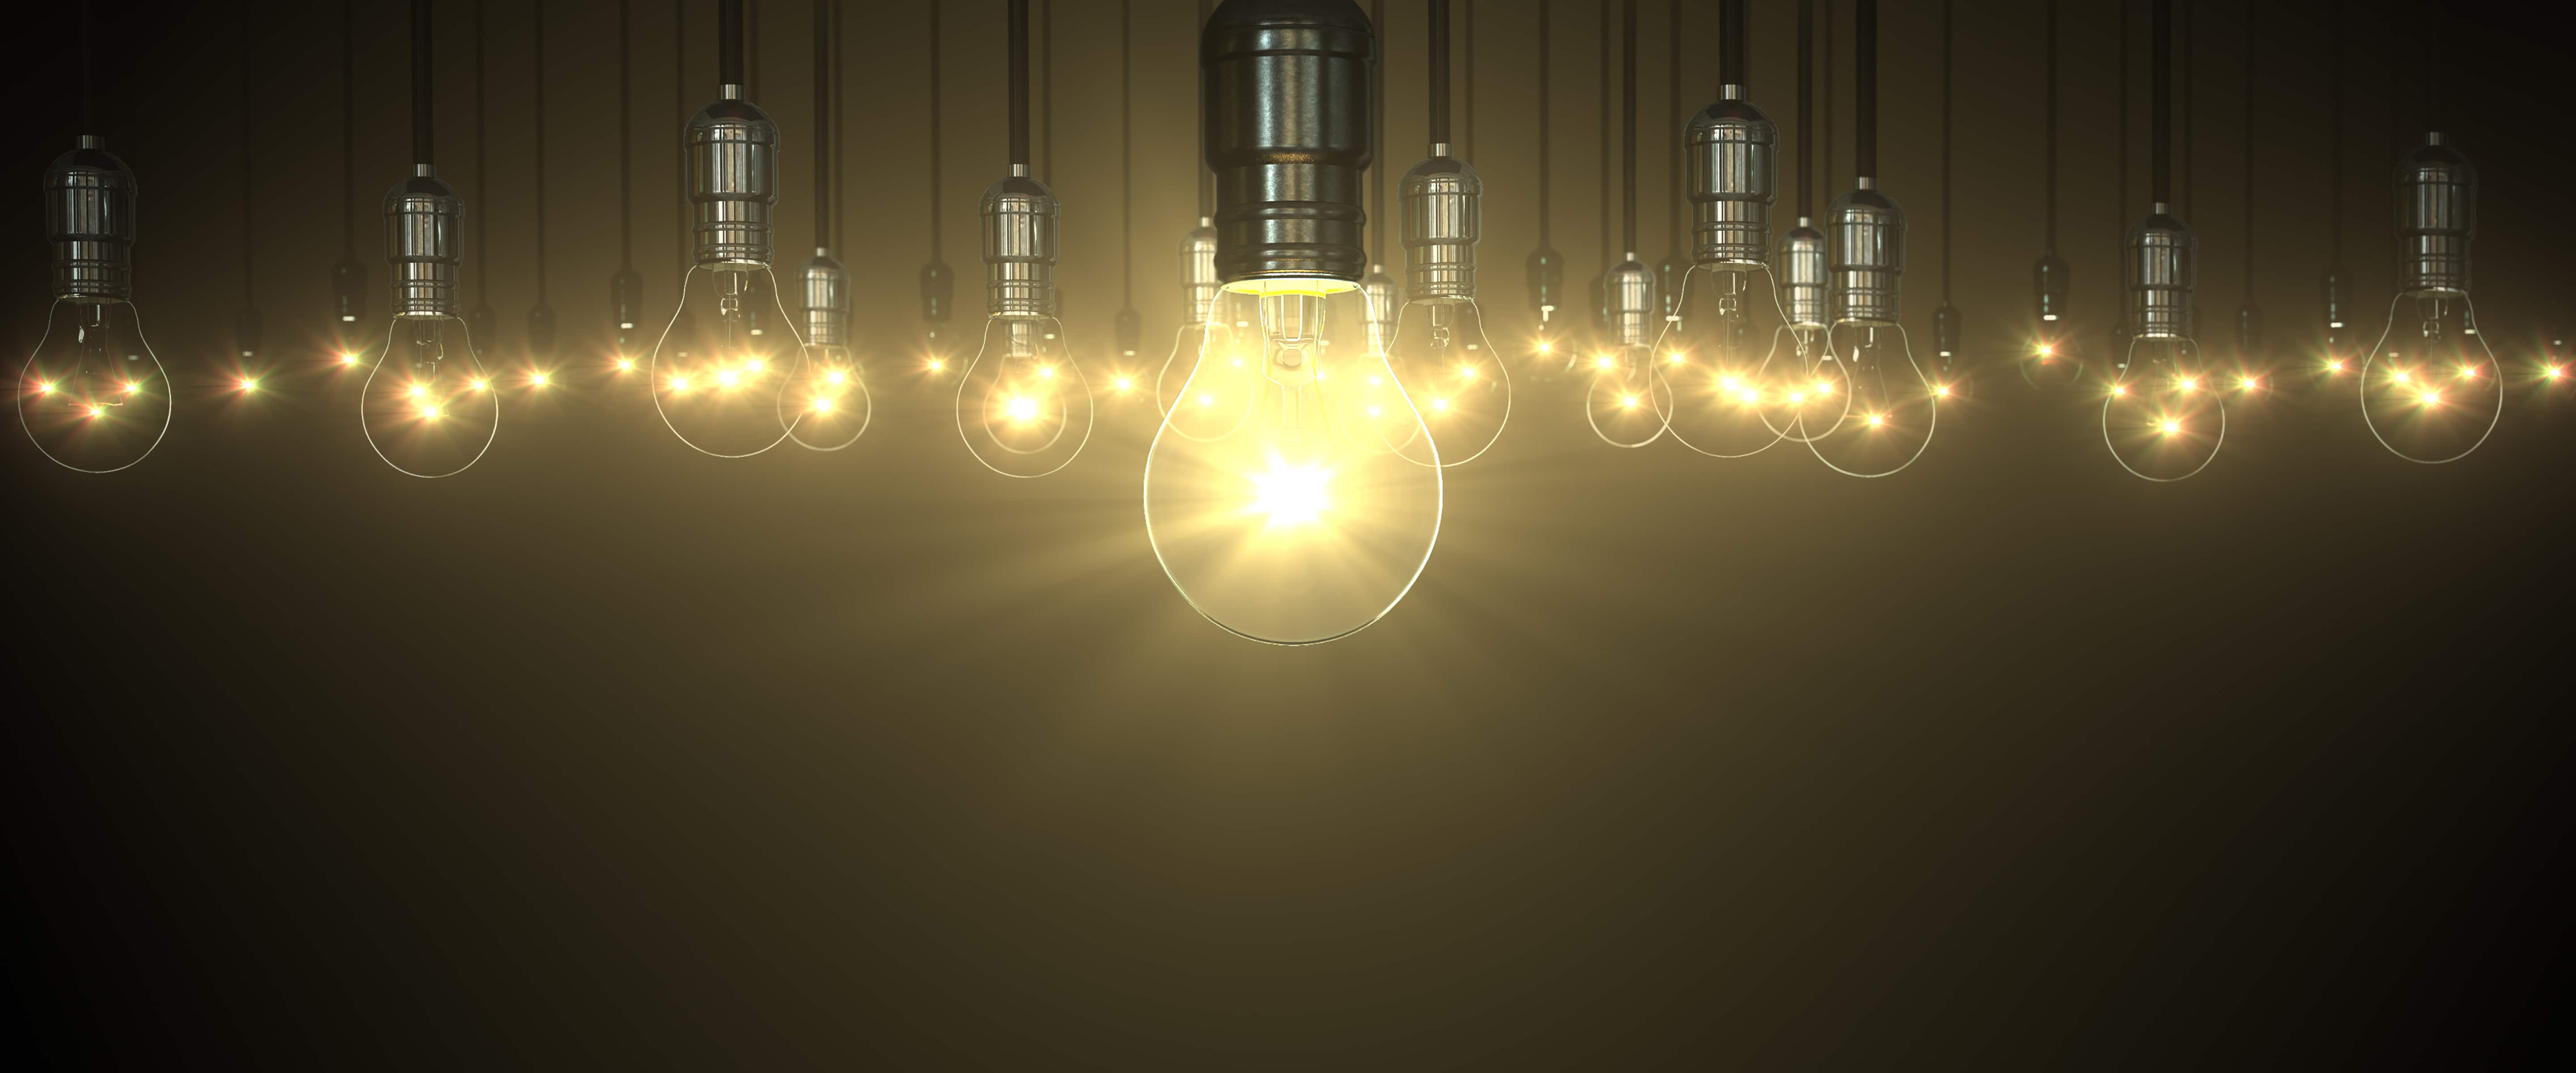 Diamond Insight - multiple shining light bulbs